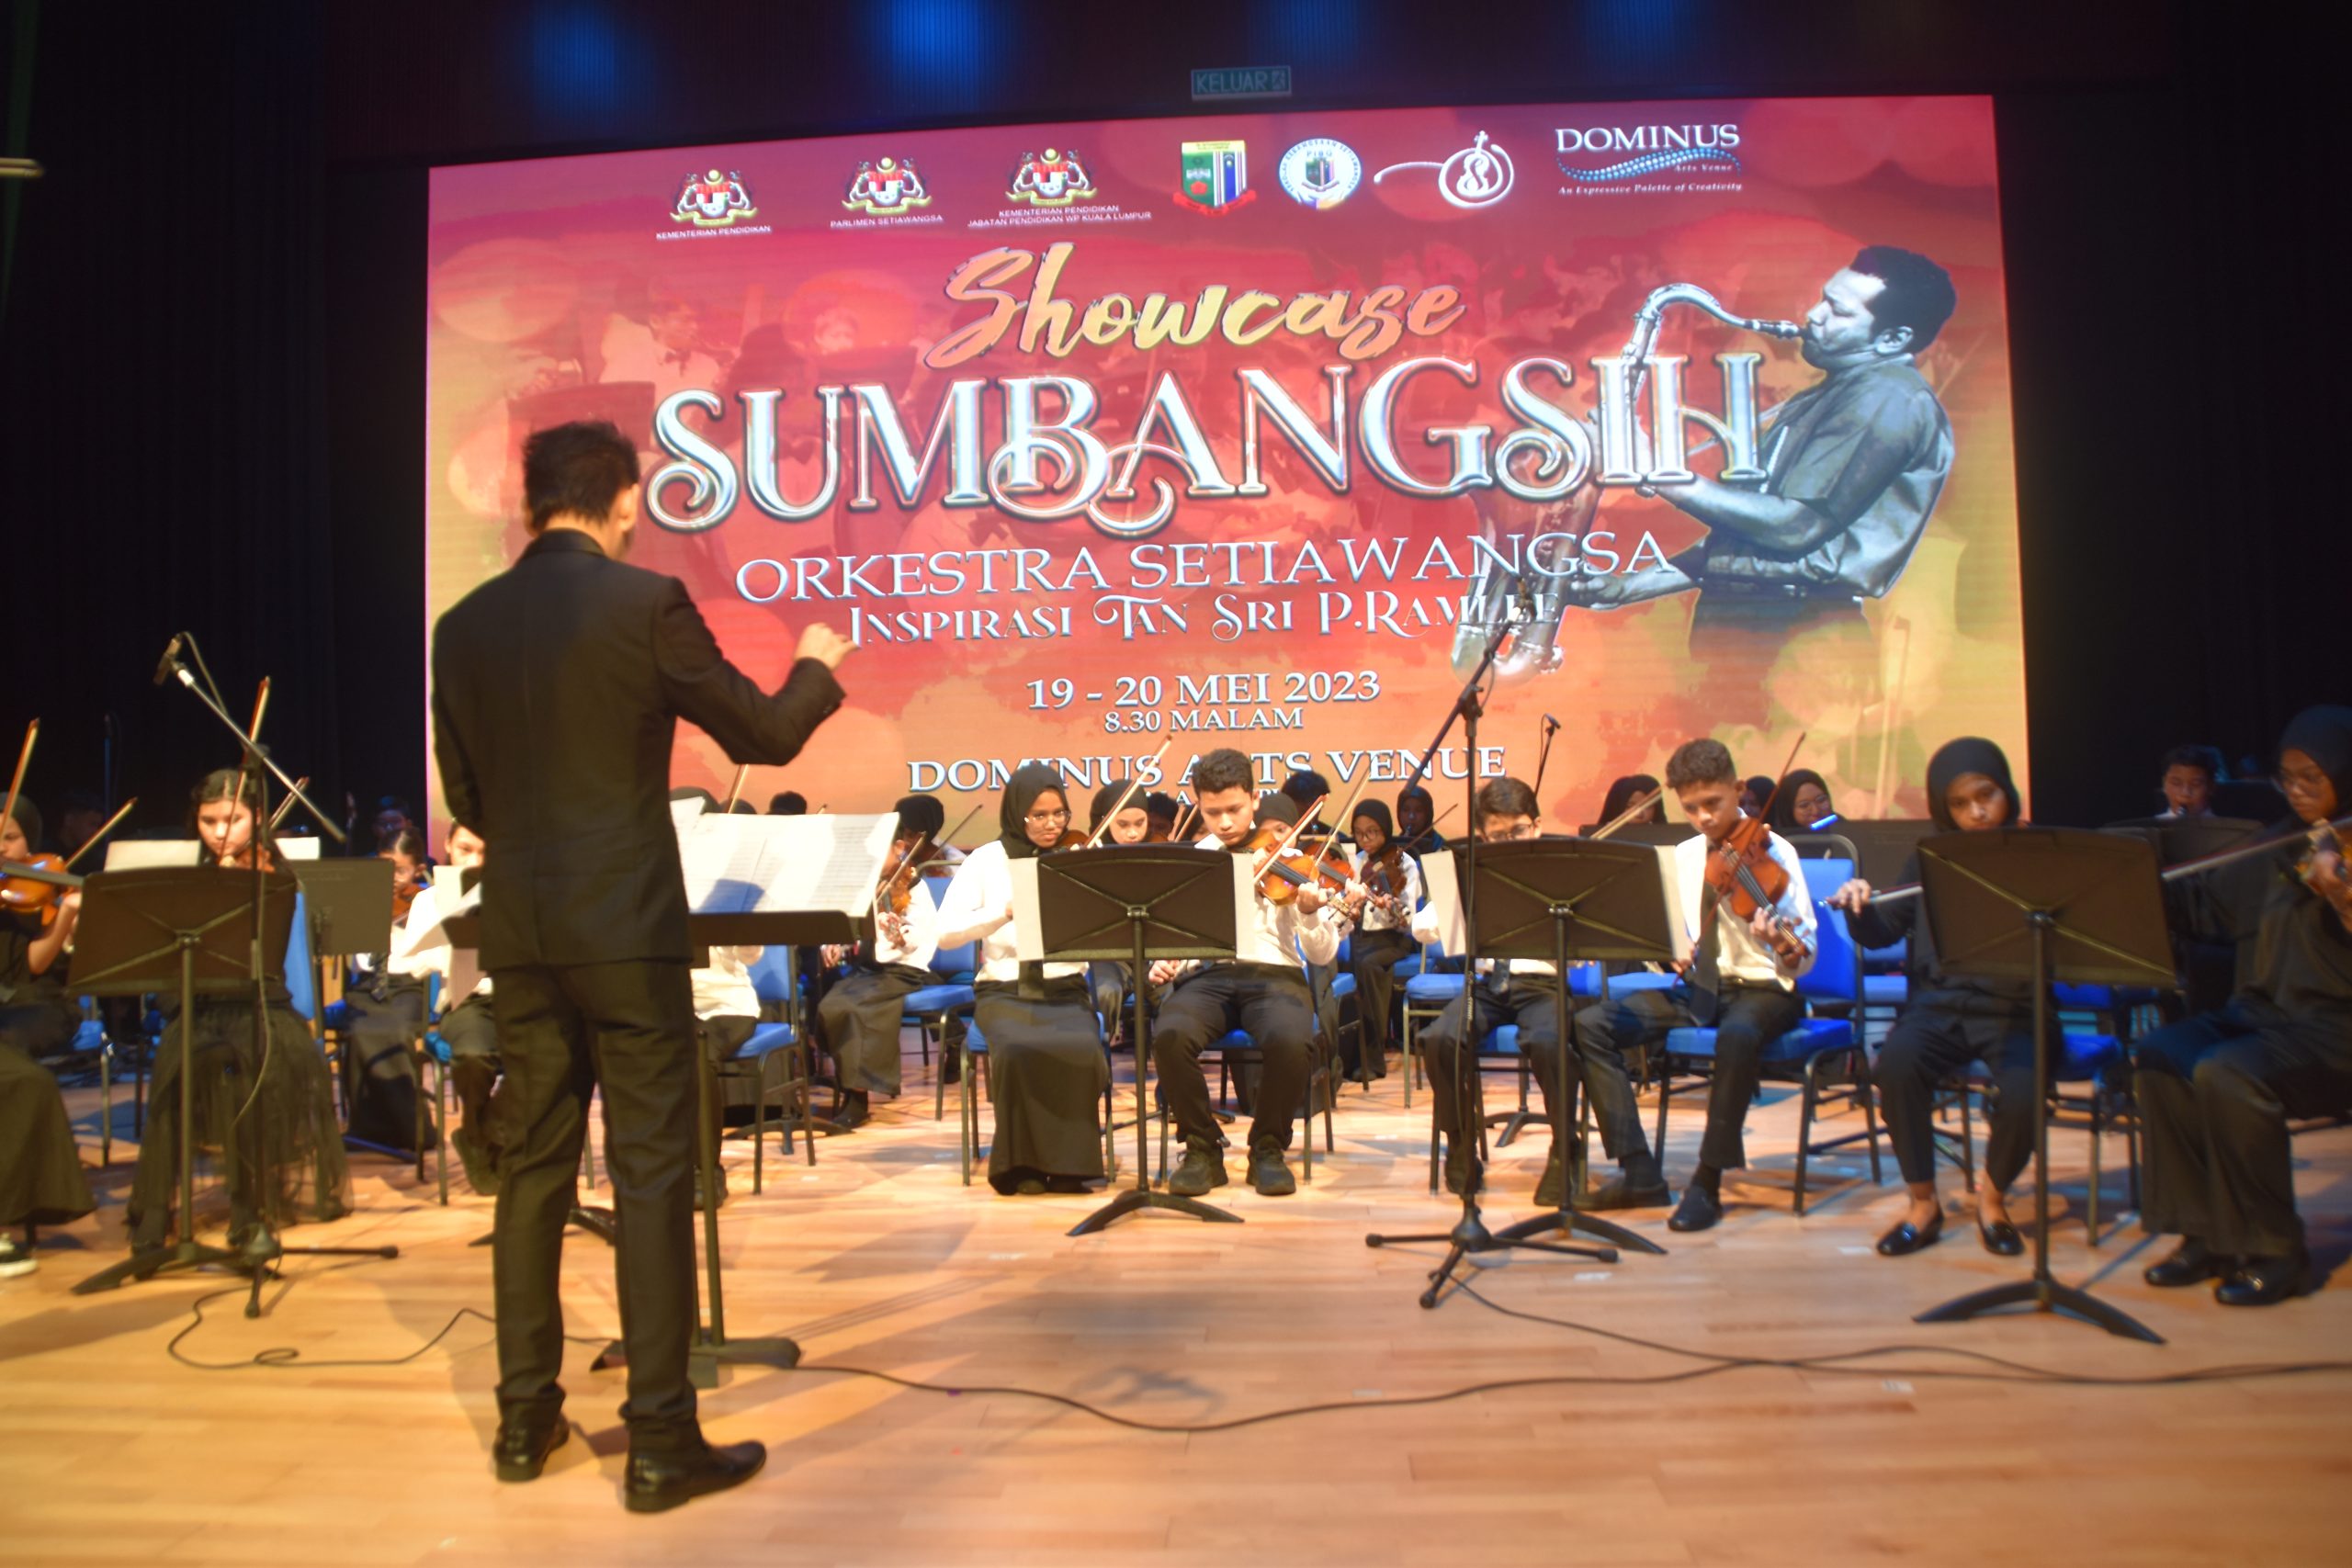 Showcase Sumbangsih (Setiawangsa Orchestra) 4